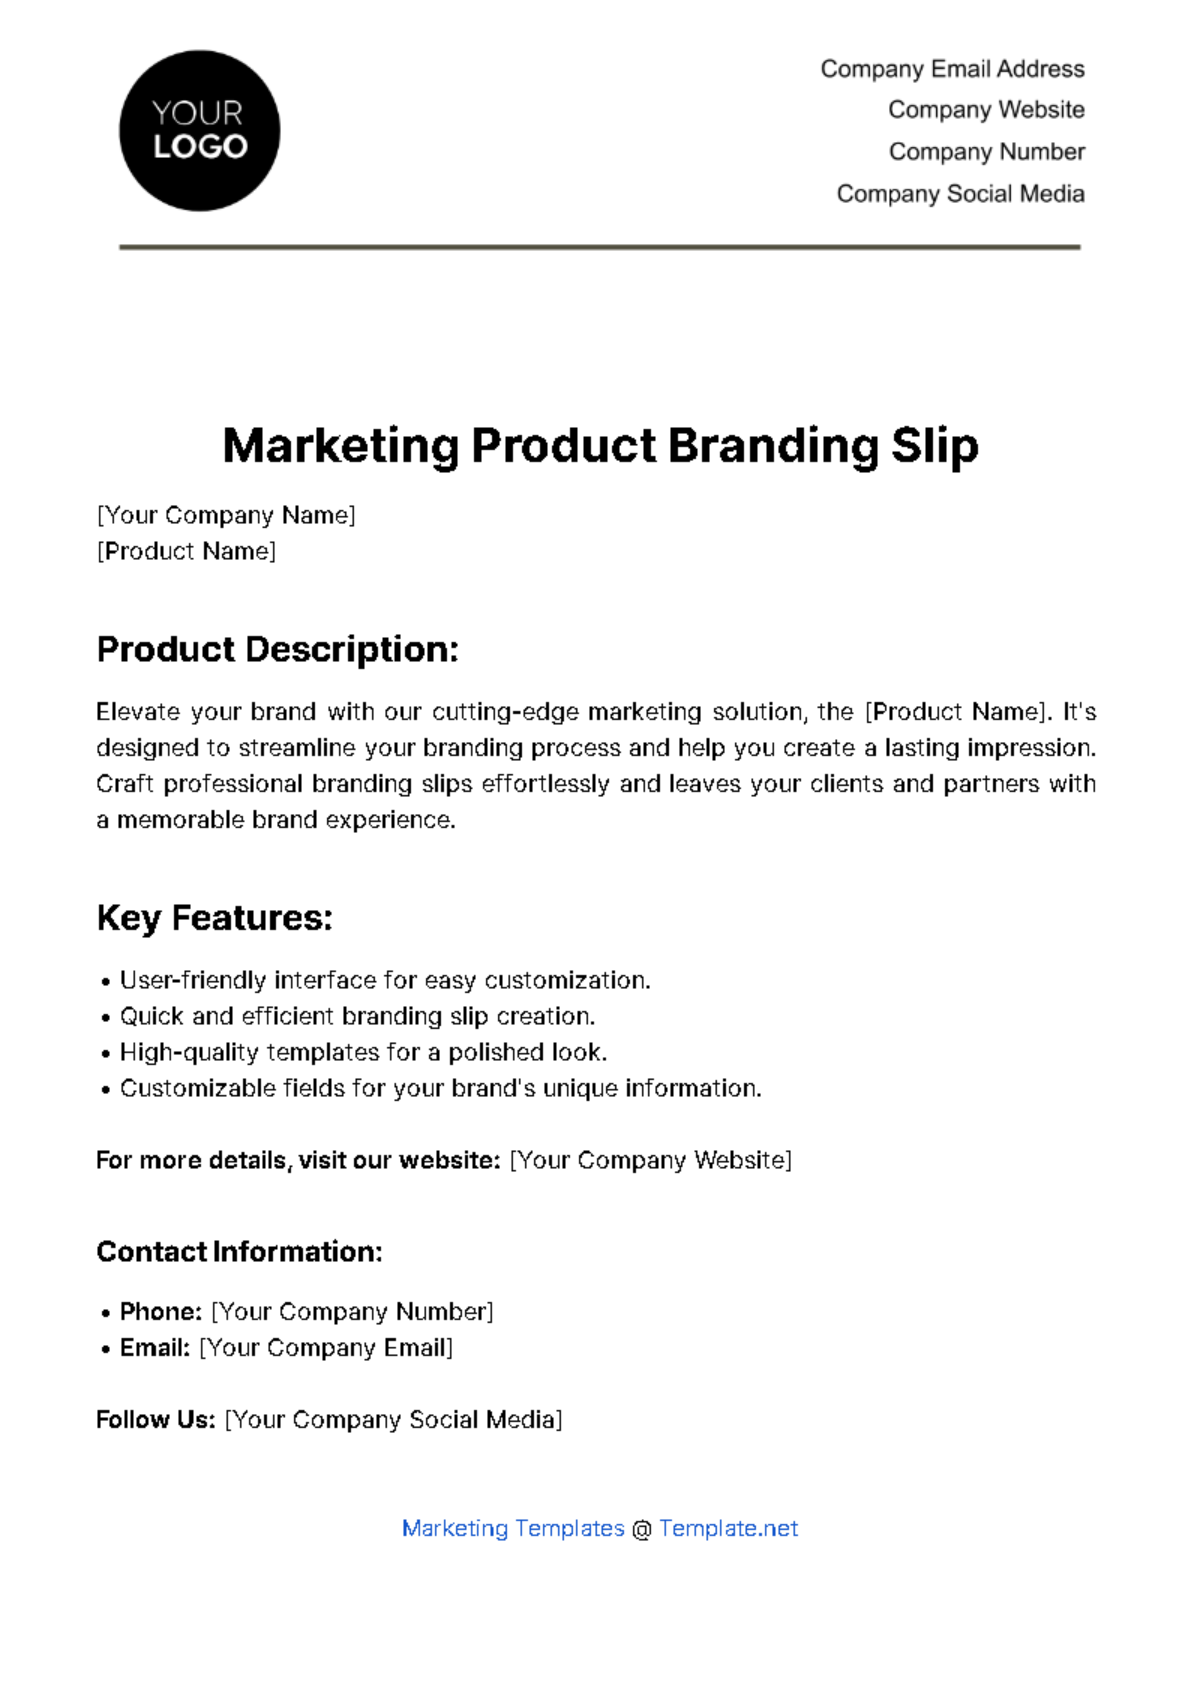 Marketing Product Branding Slip Template